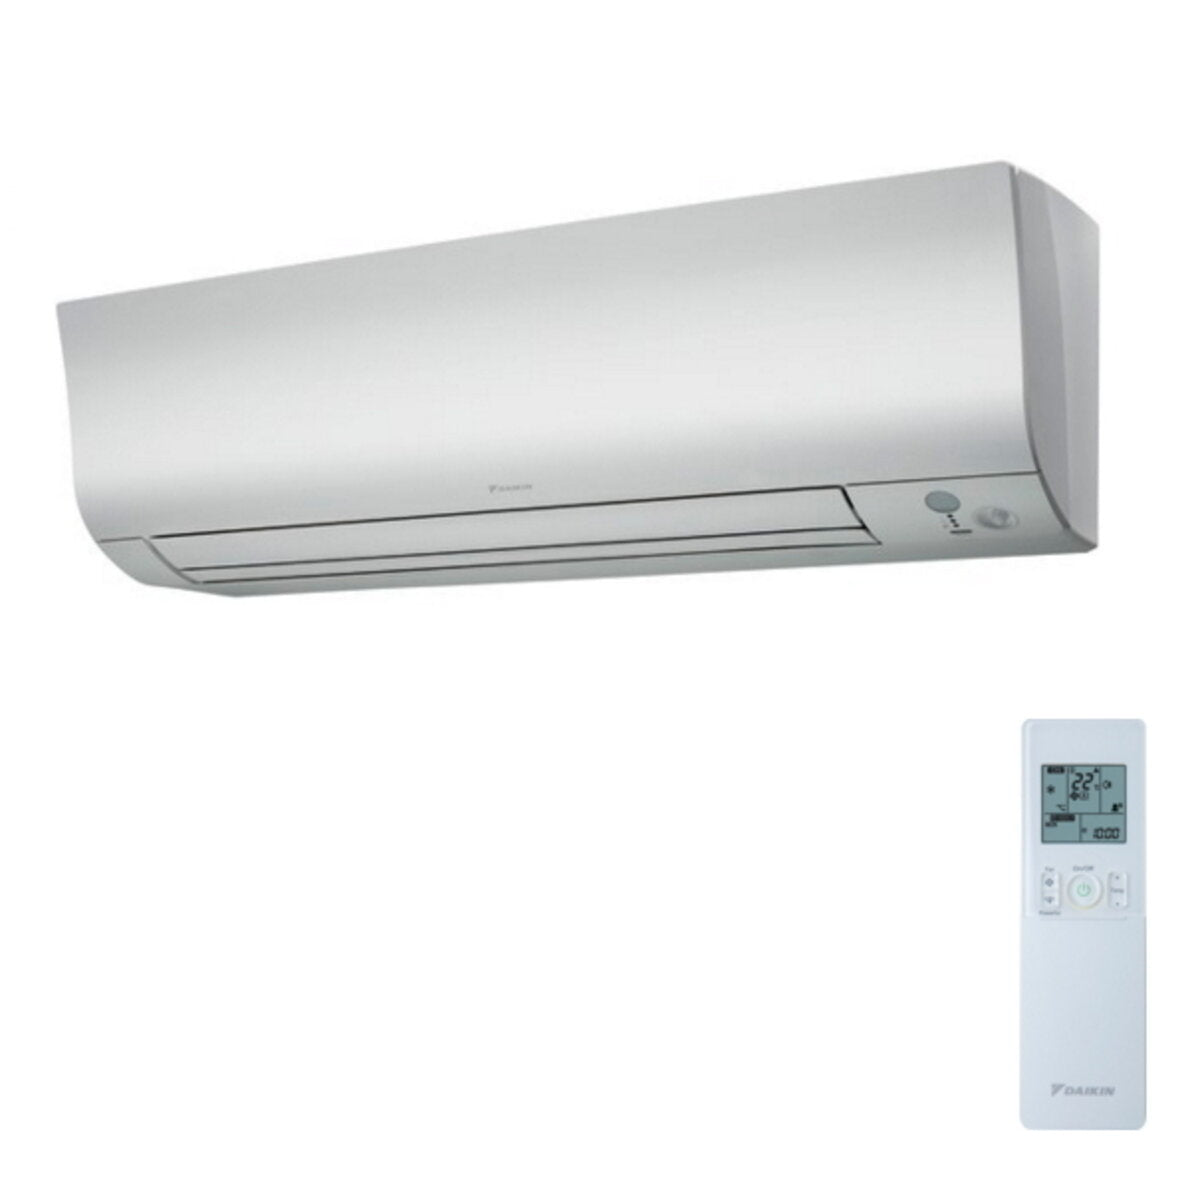 Daikin Perfera indoor unit 21000 BTU R32 gas inverter air conditioner - with wi-fi